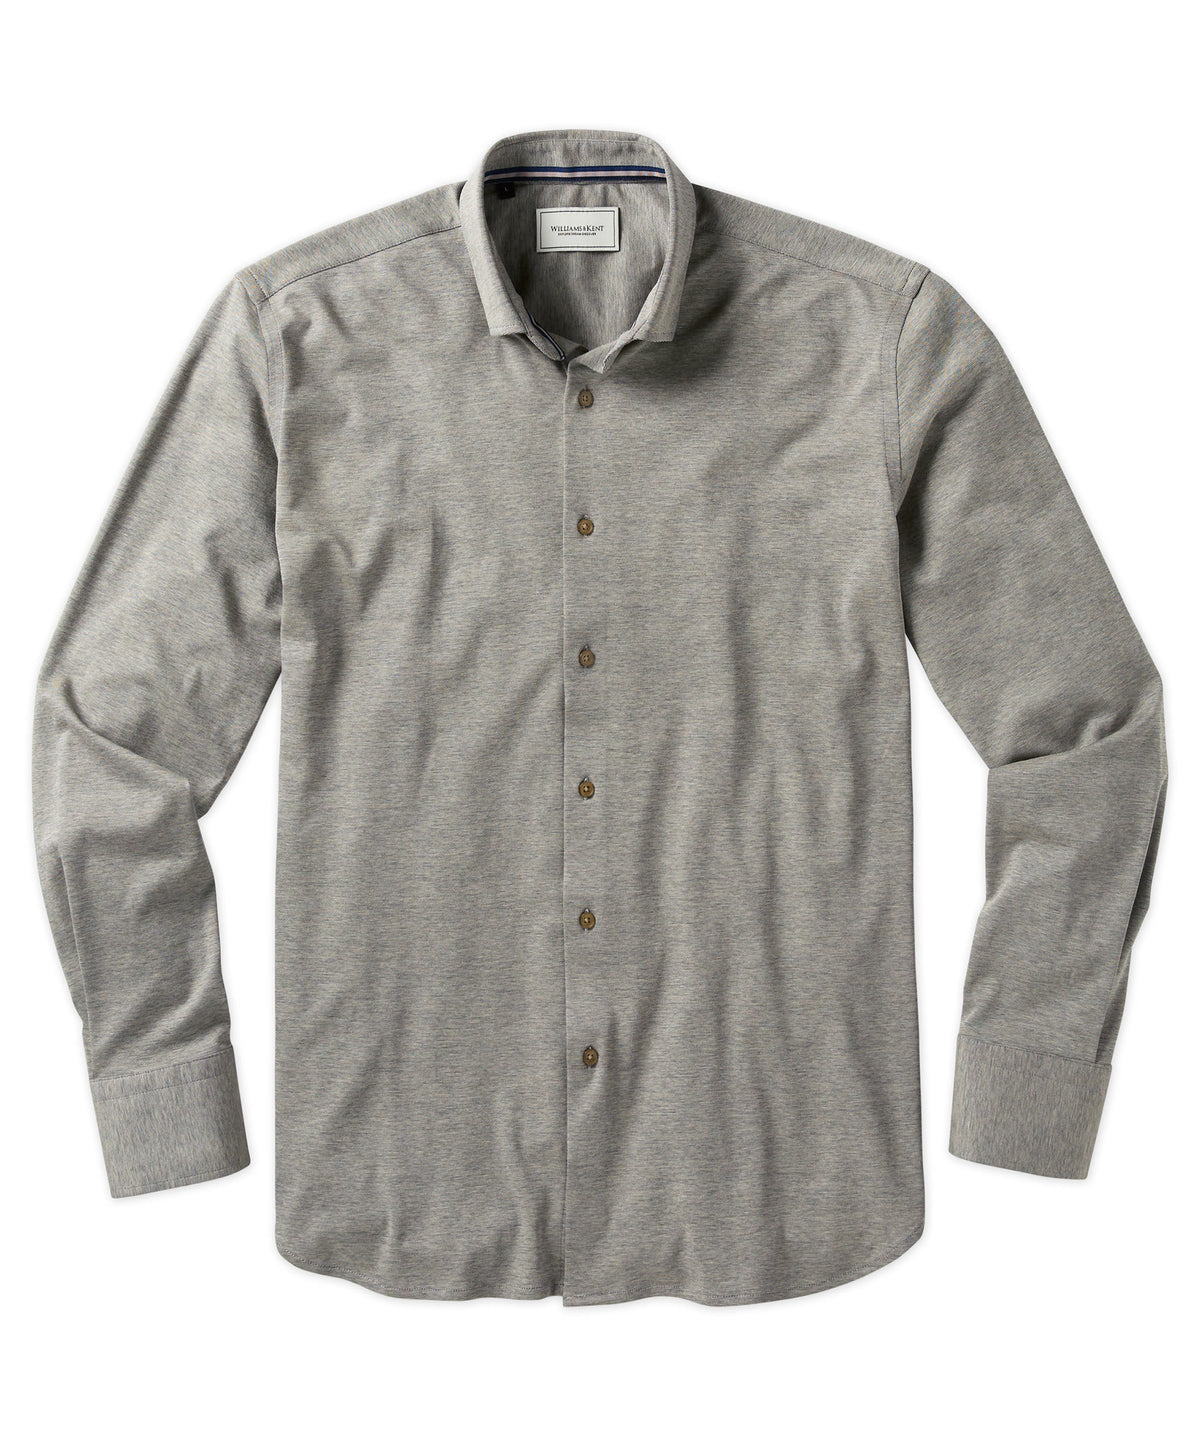 Mercerized Pima Cotton Textured Shirt